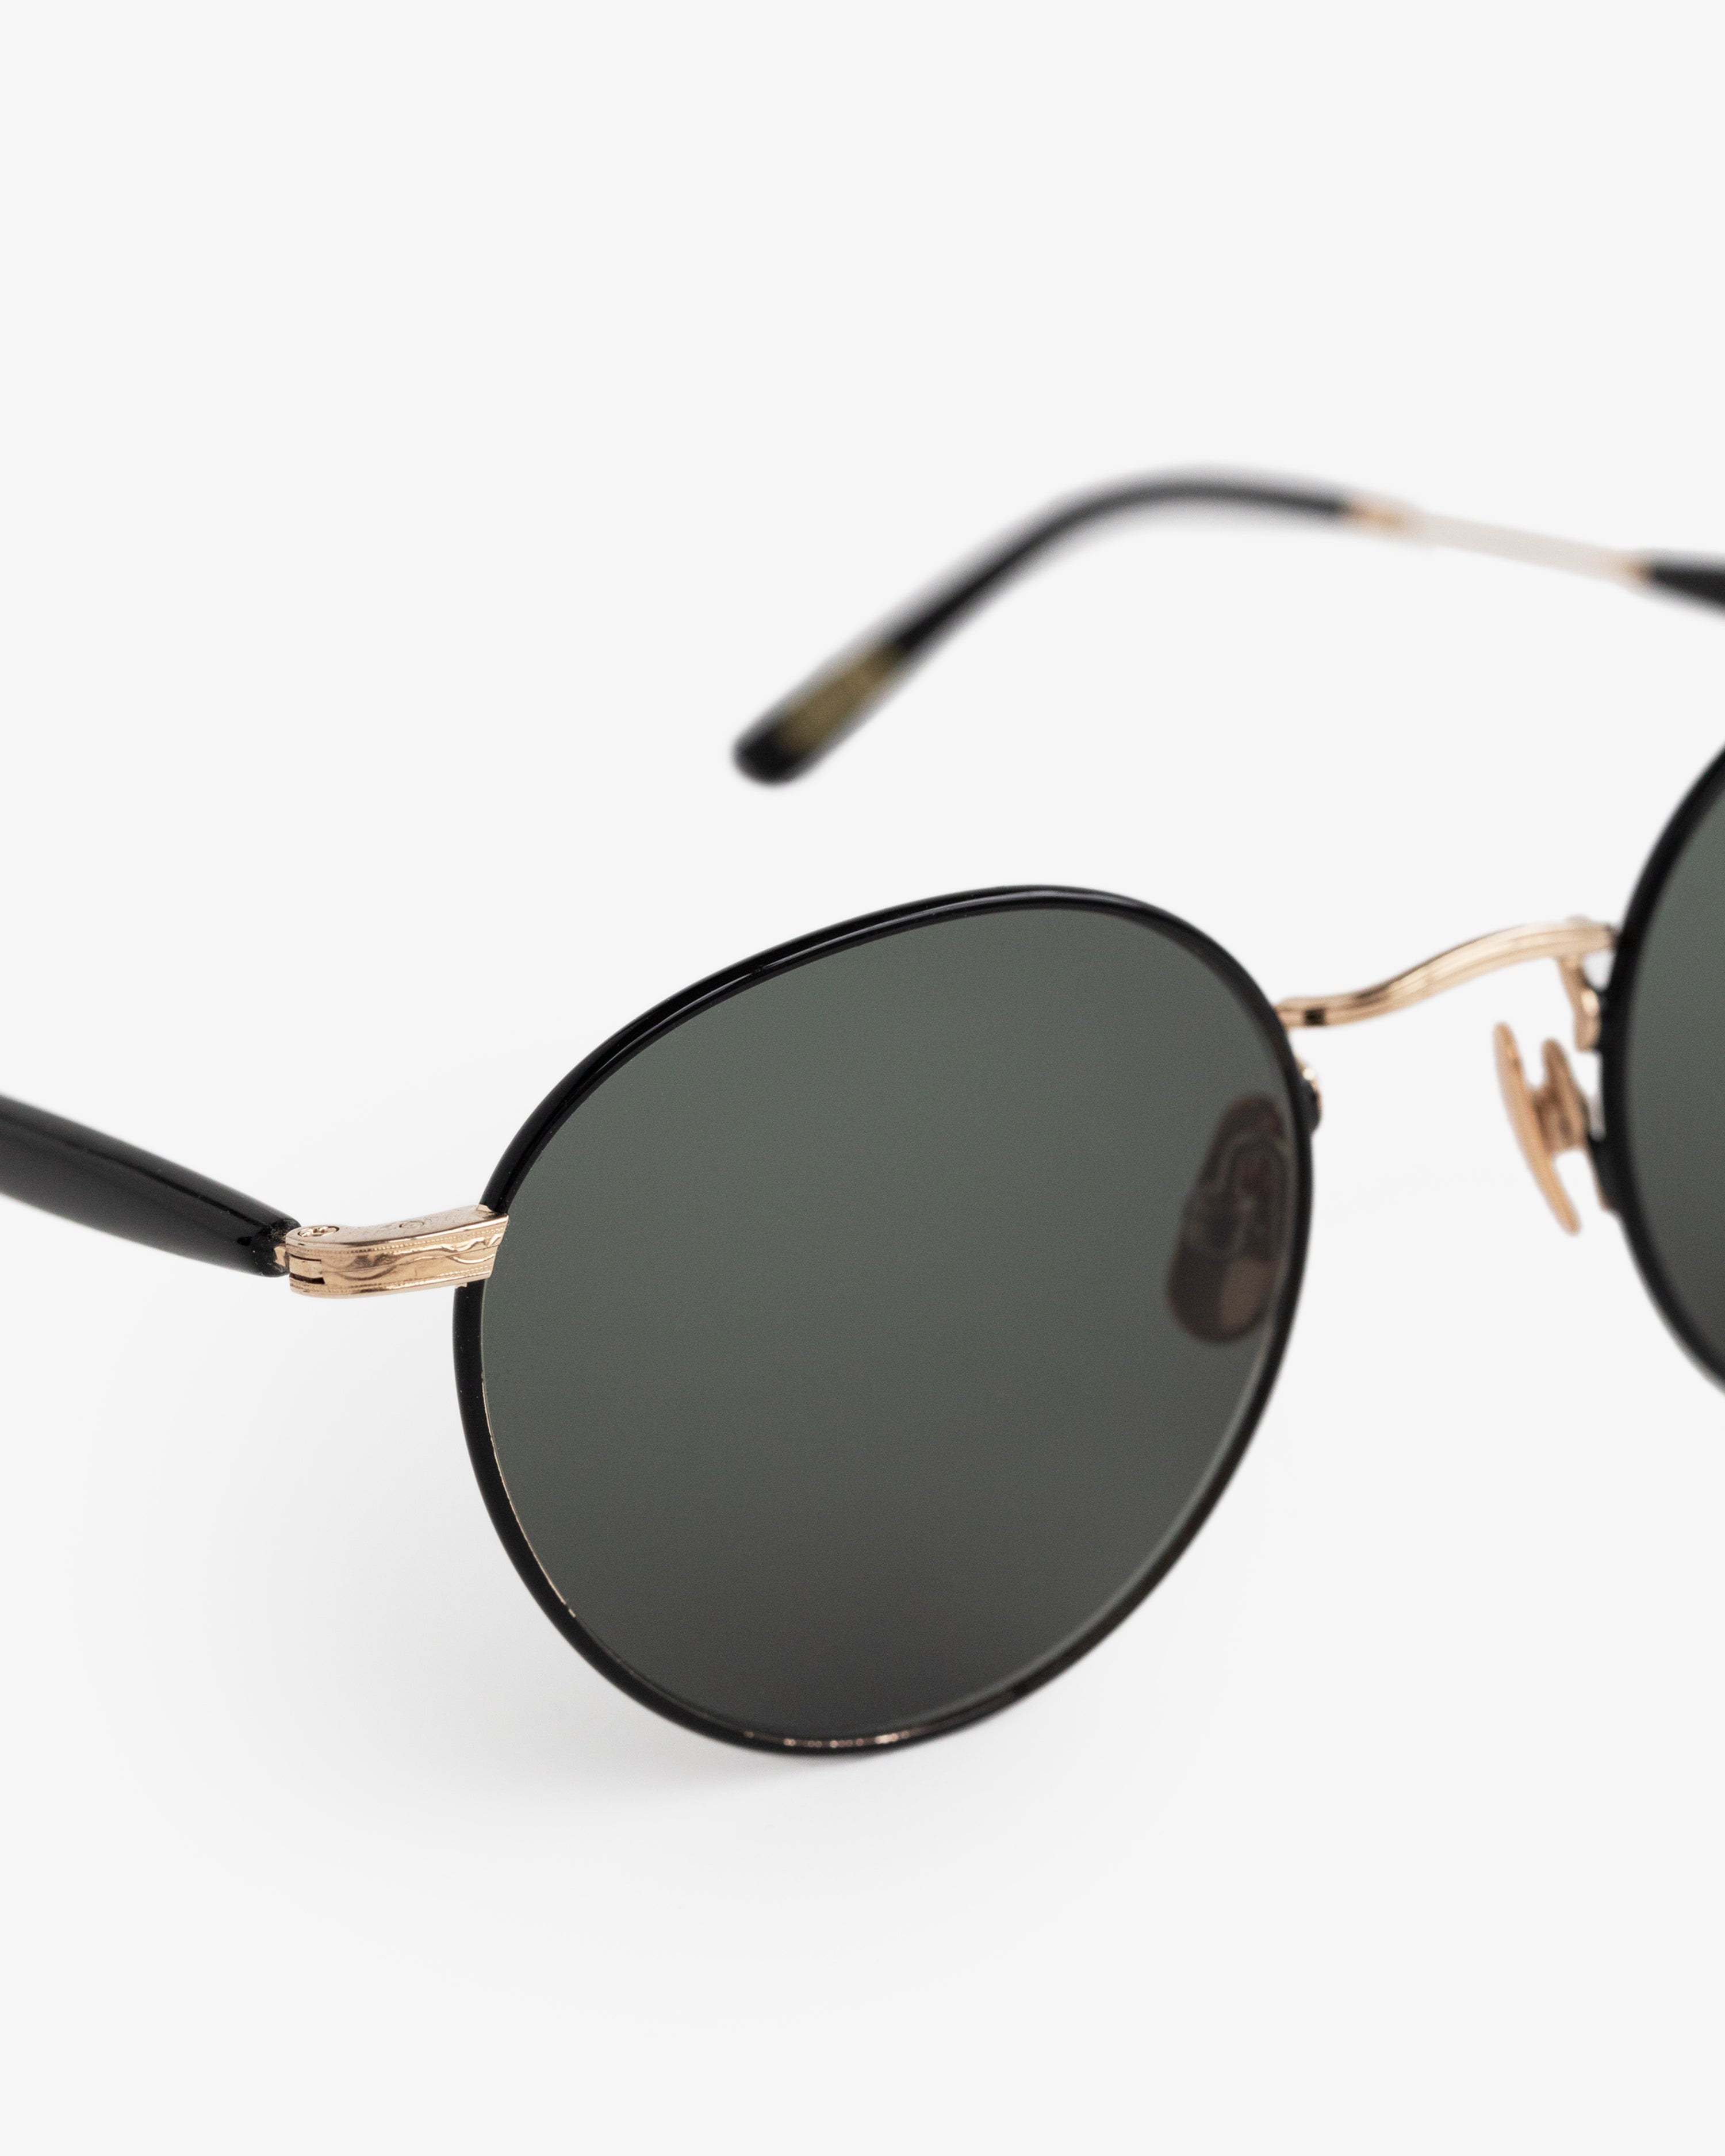 Coppola Sunglasses